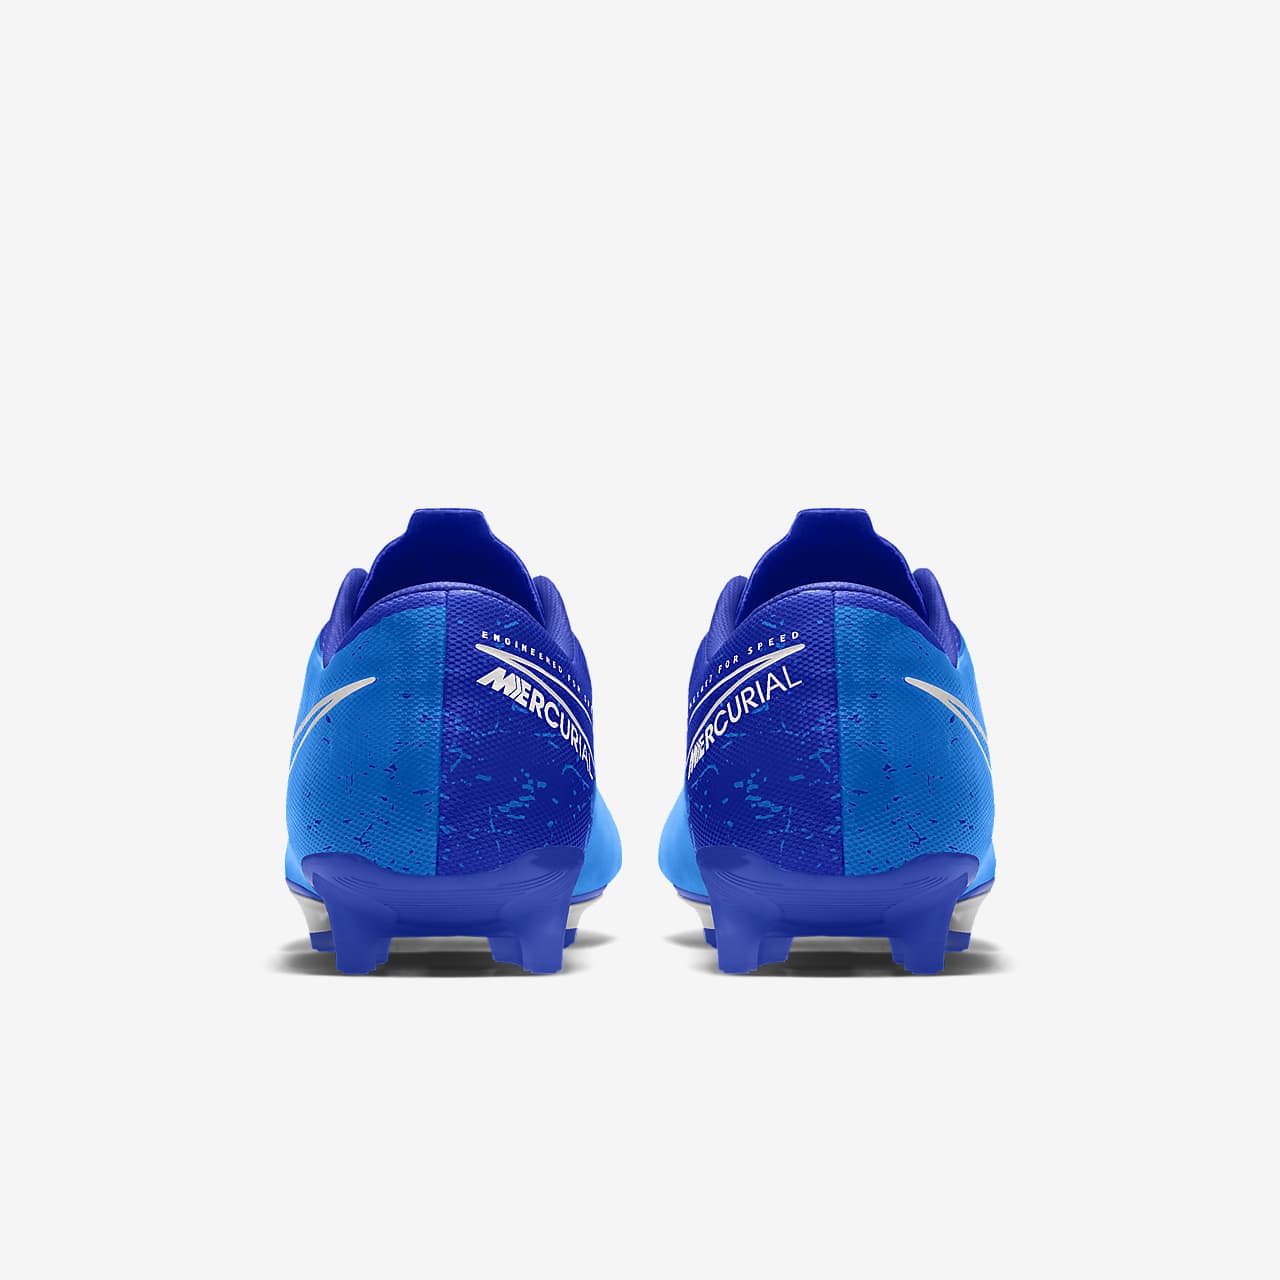 Shoes Nike Mercurial Vapor 13 Club Mds TF Blue Navy blue.